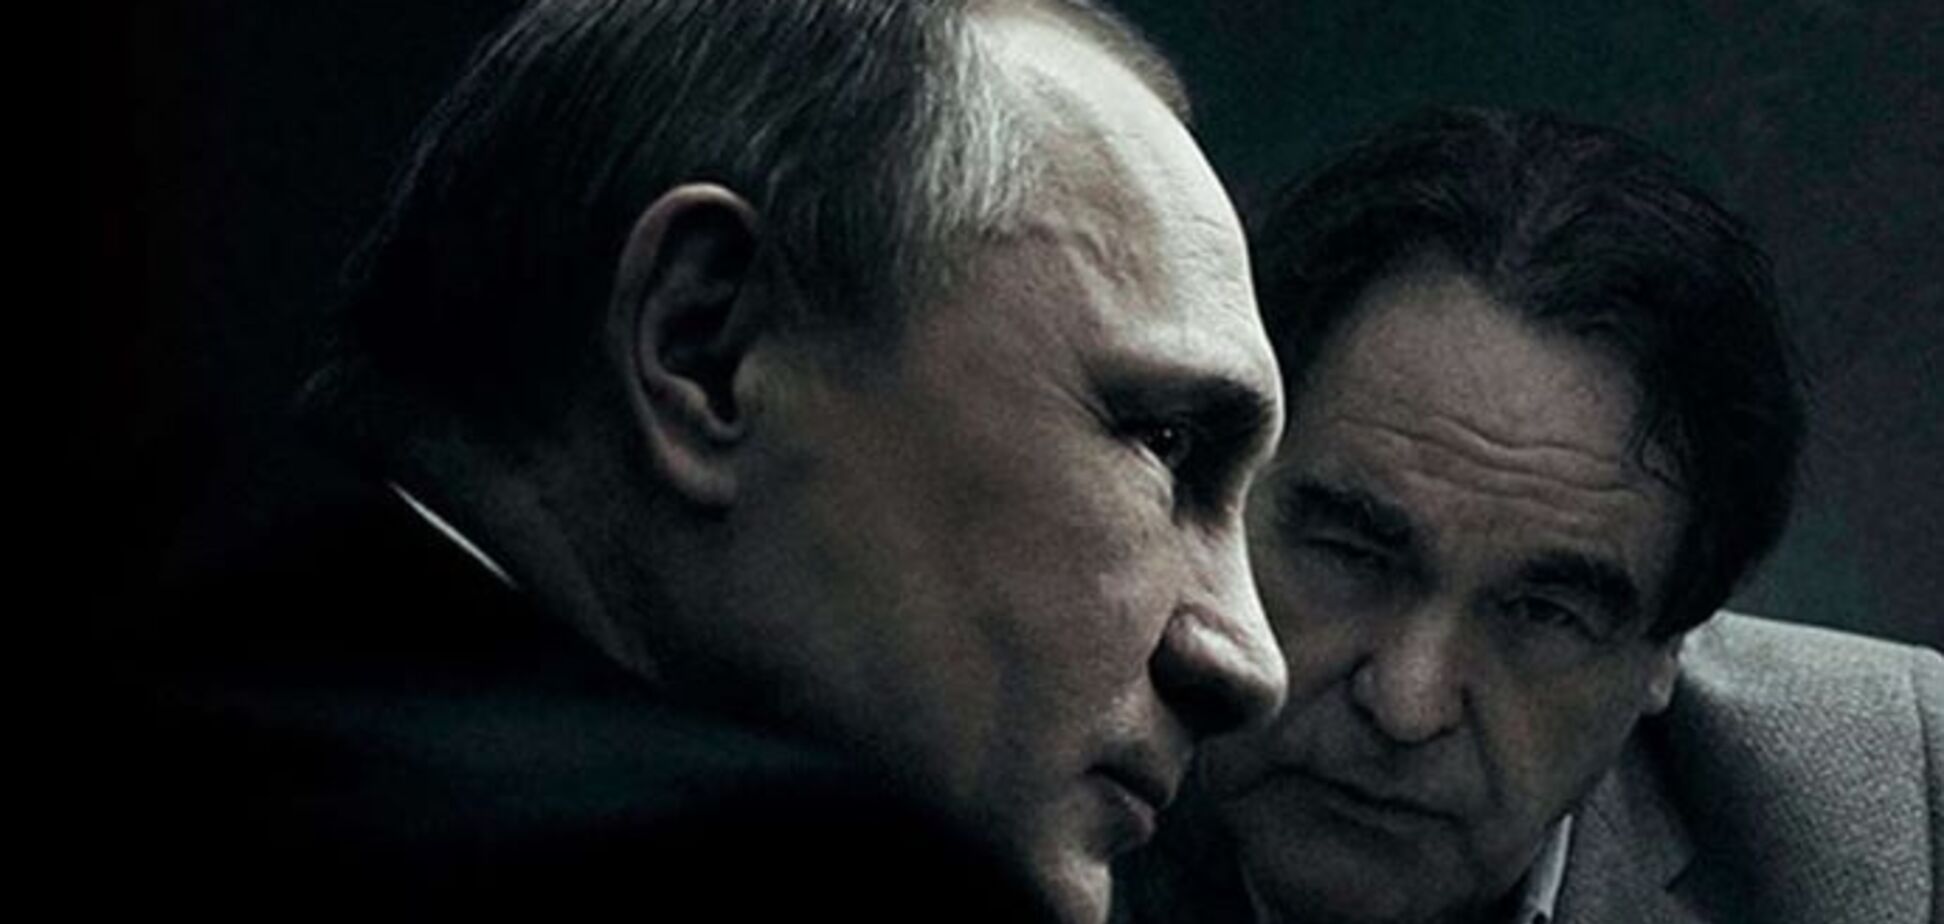 Путин и Стоун